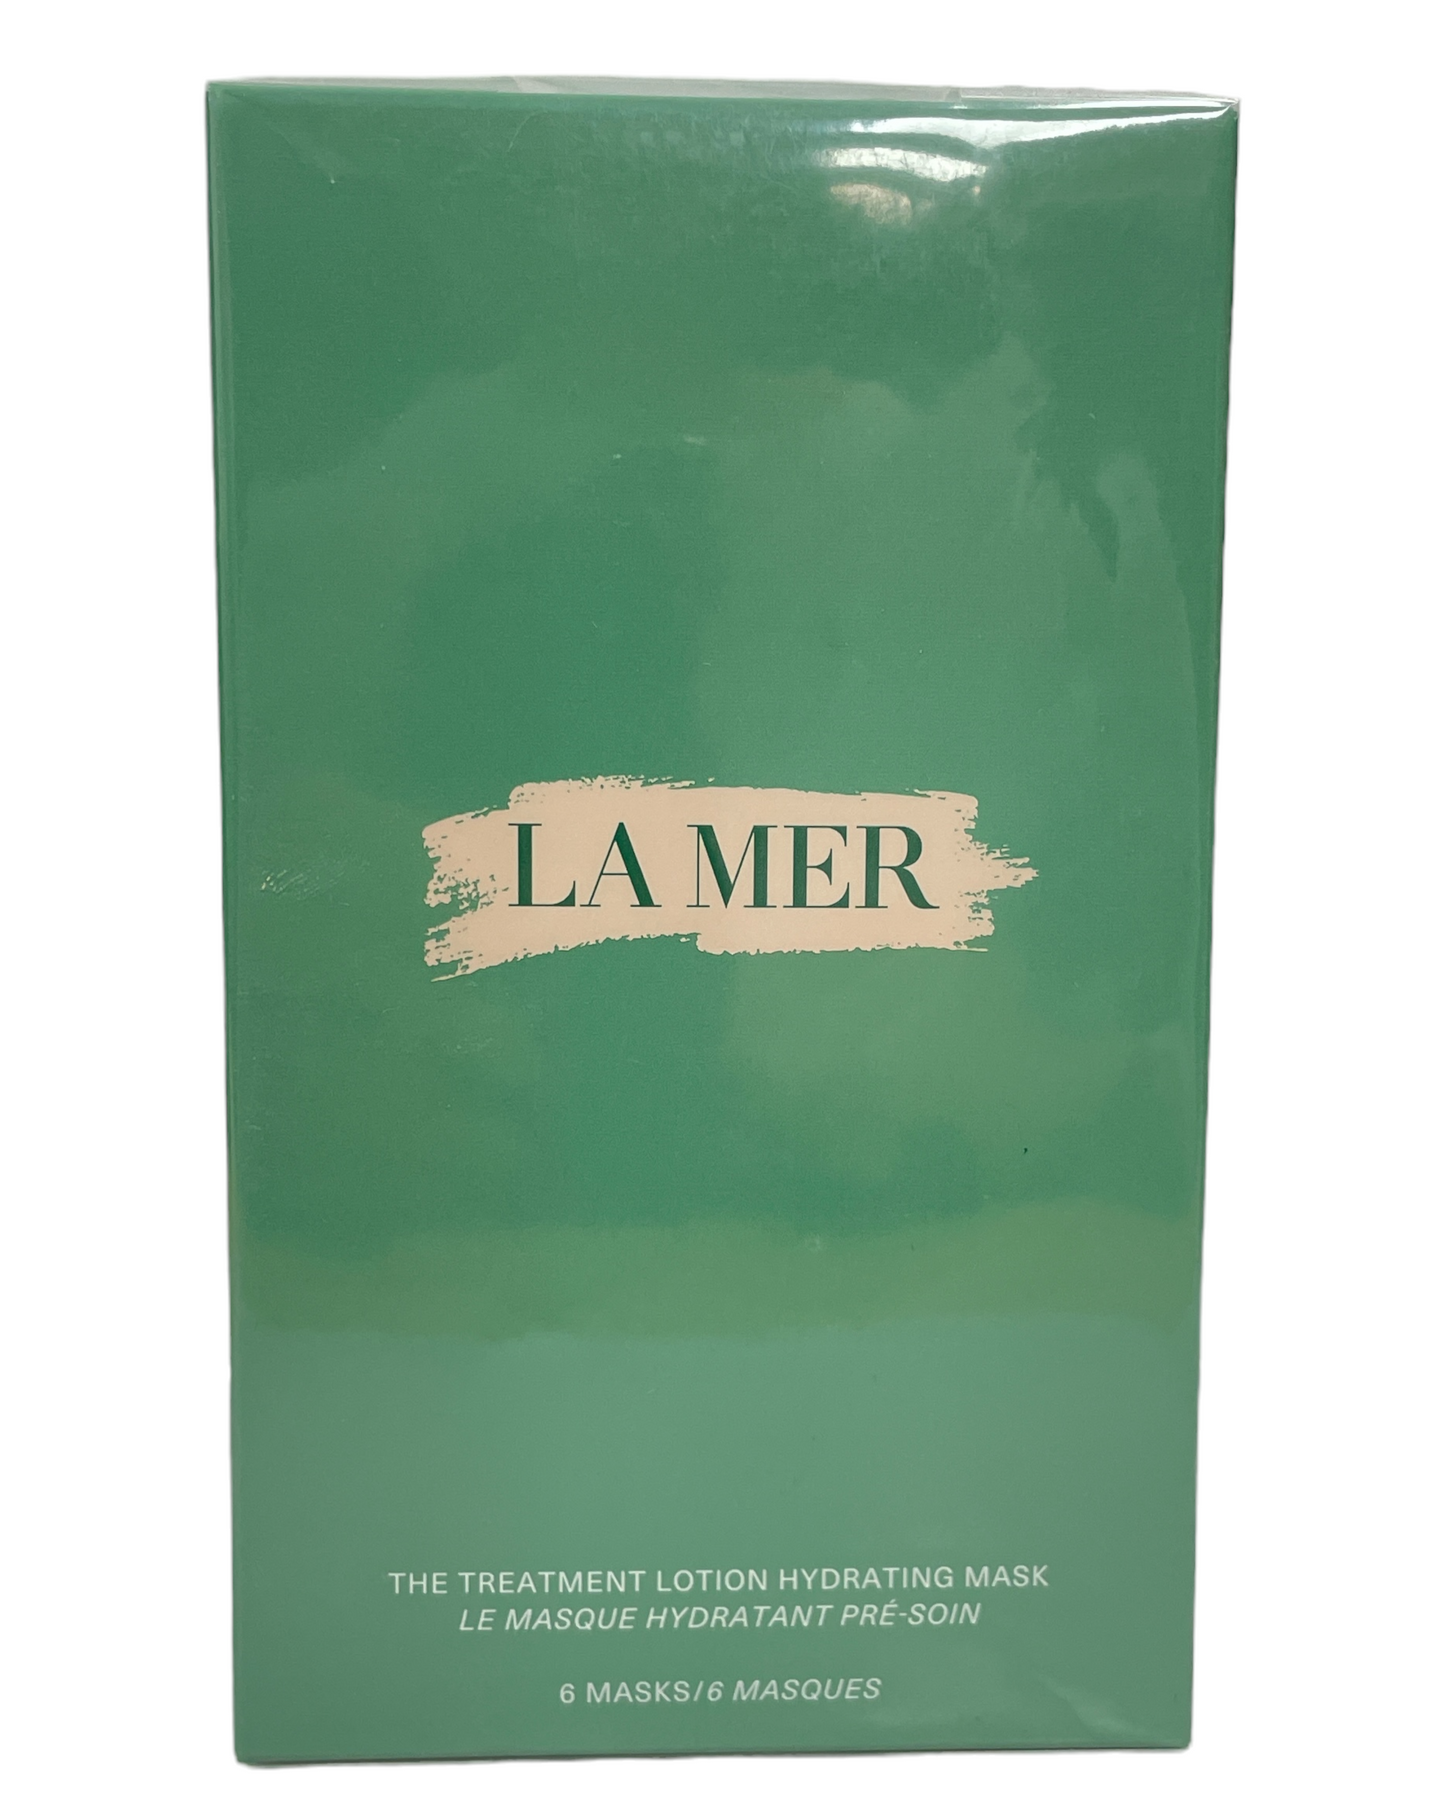 La Mer The Treatment Lotion Hydrating Mask (6 Masks)